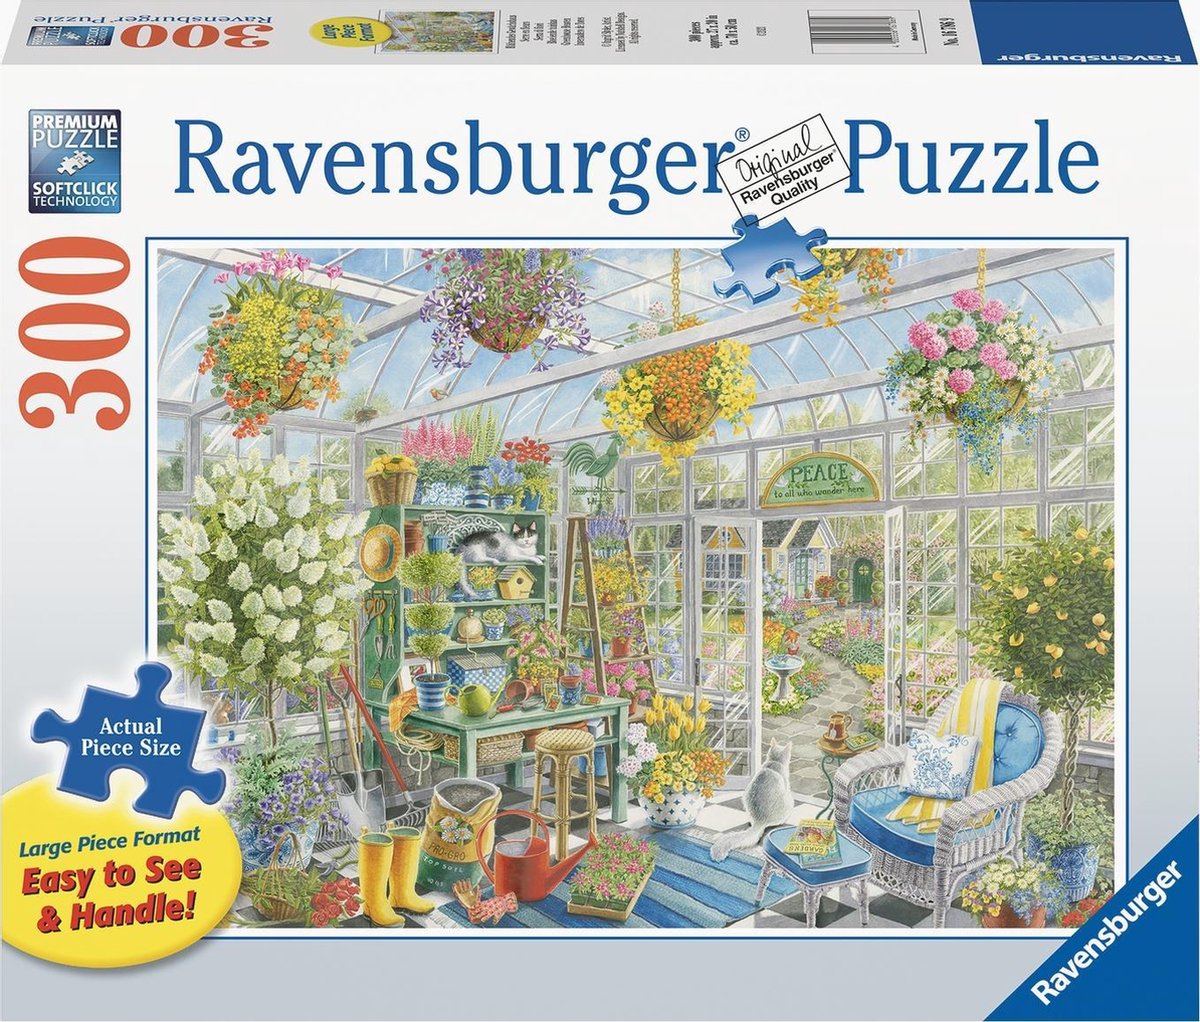   puzzel Bloeiende tuinkas - Legpuzzel - 300 stukjes extra groot